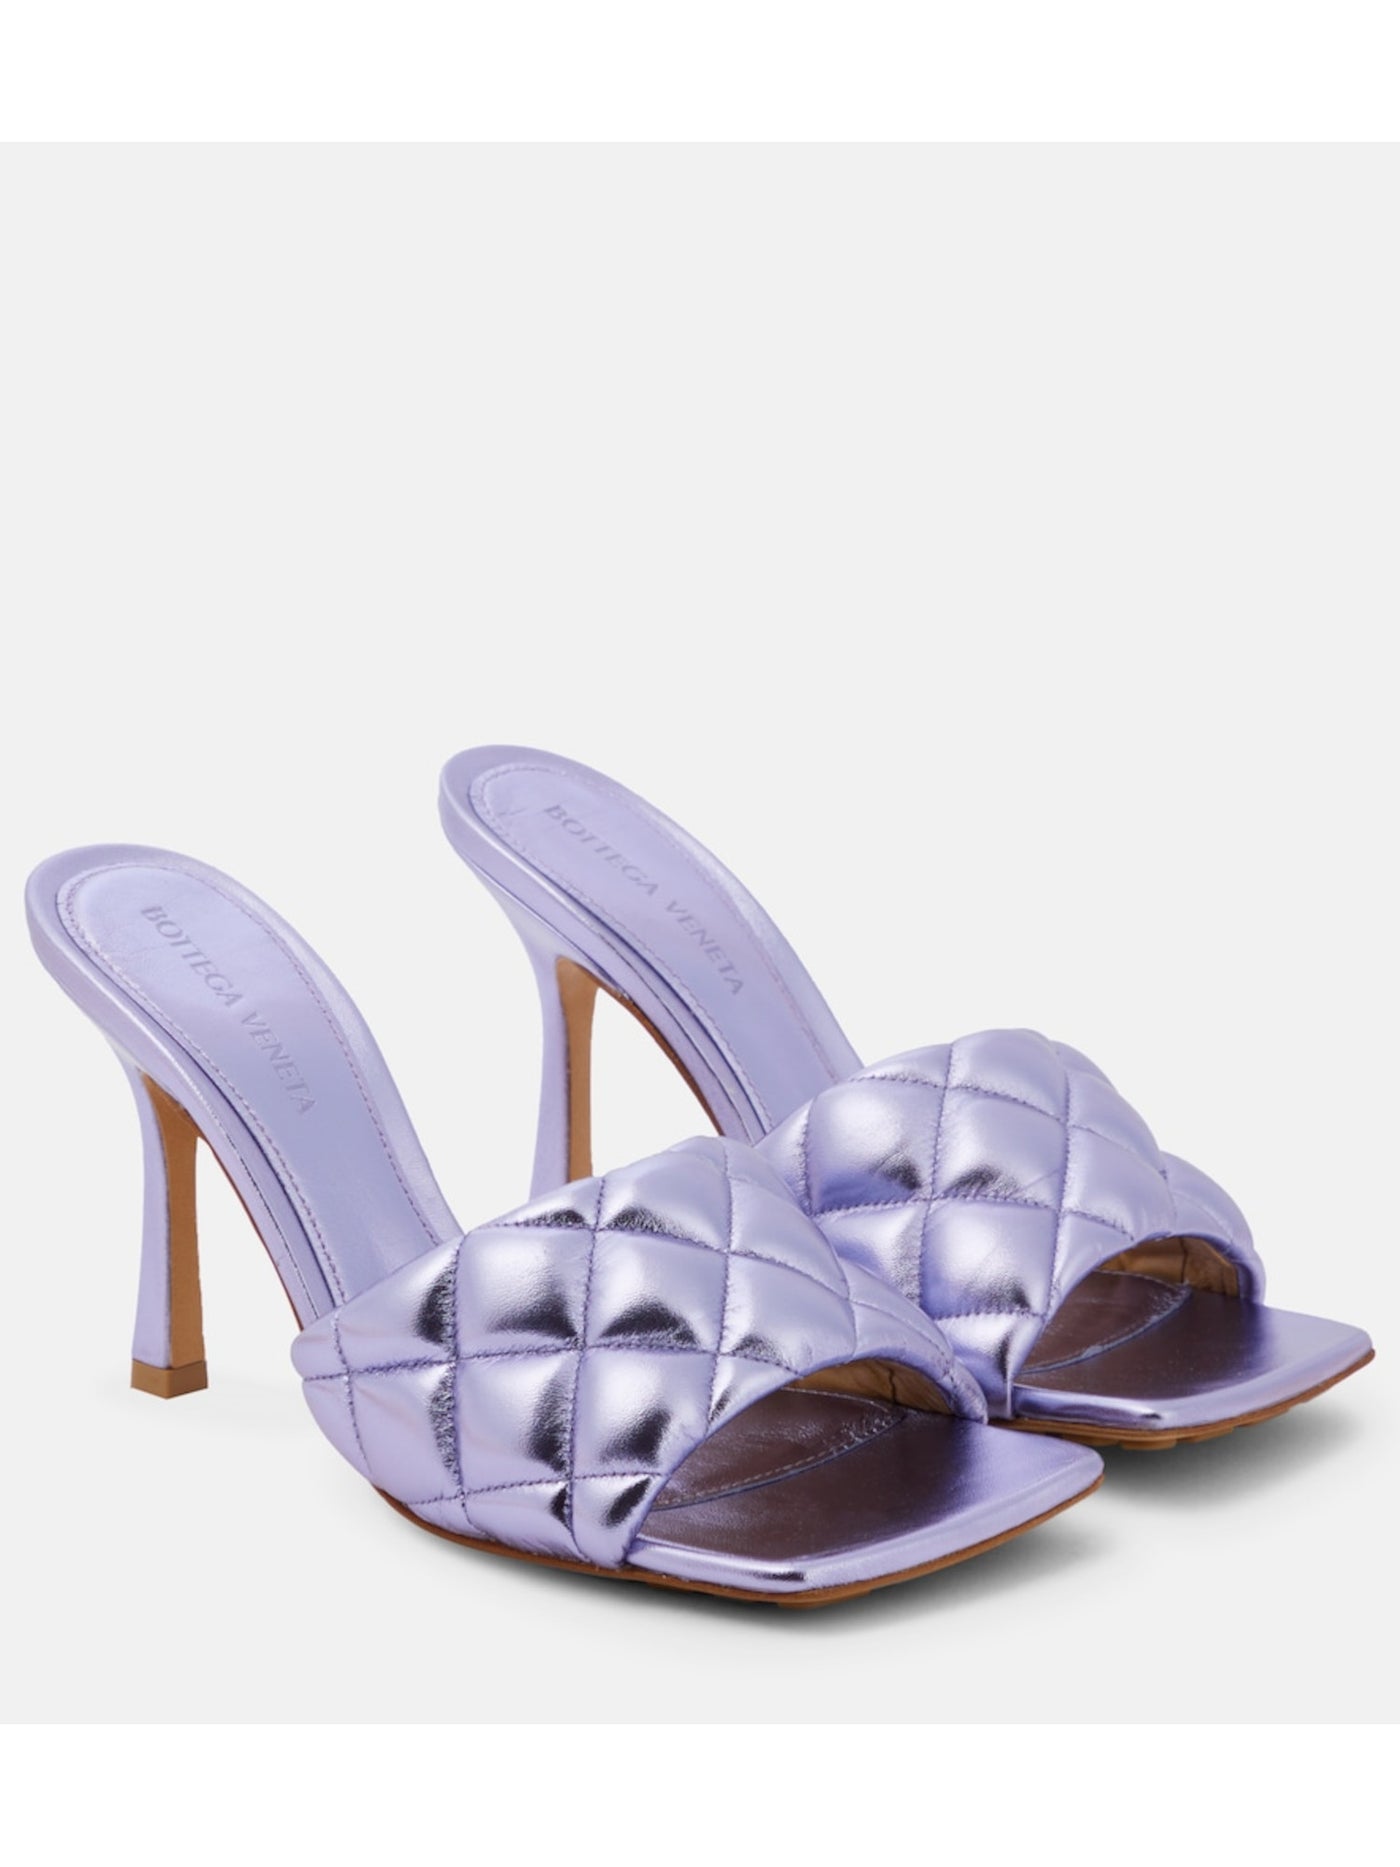 BOTTEGA VENETA Womens Purple Quilted Open Toe Stiletto Slip On Leather Dress Heeled Sandal 37.5